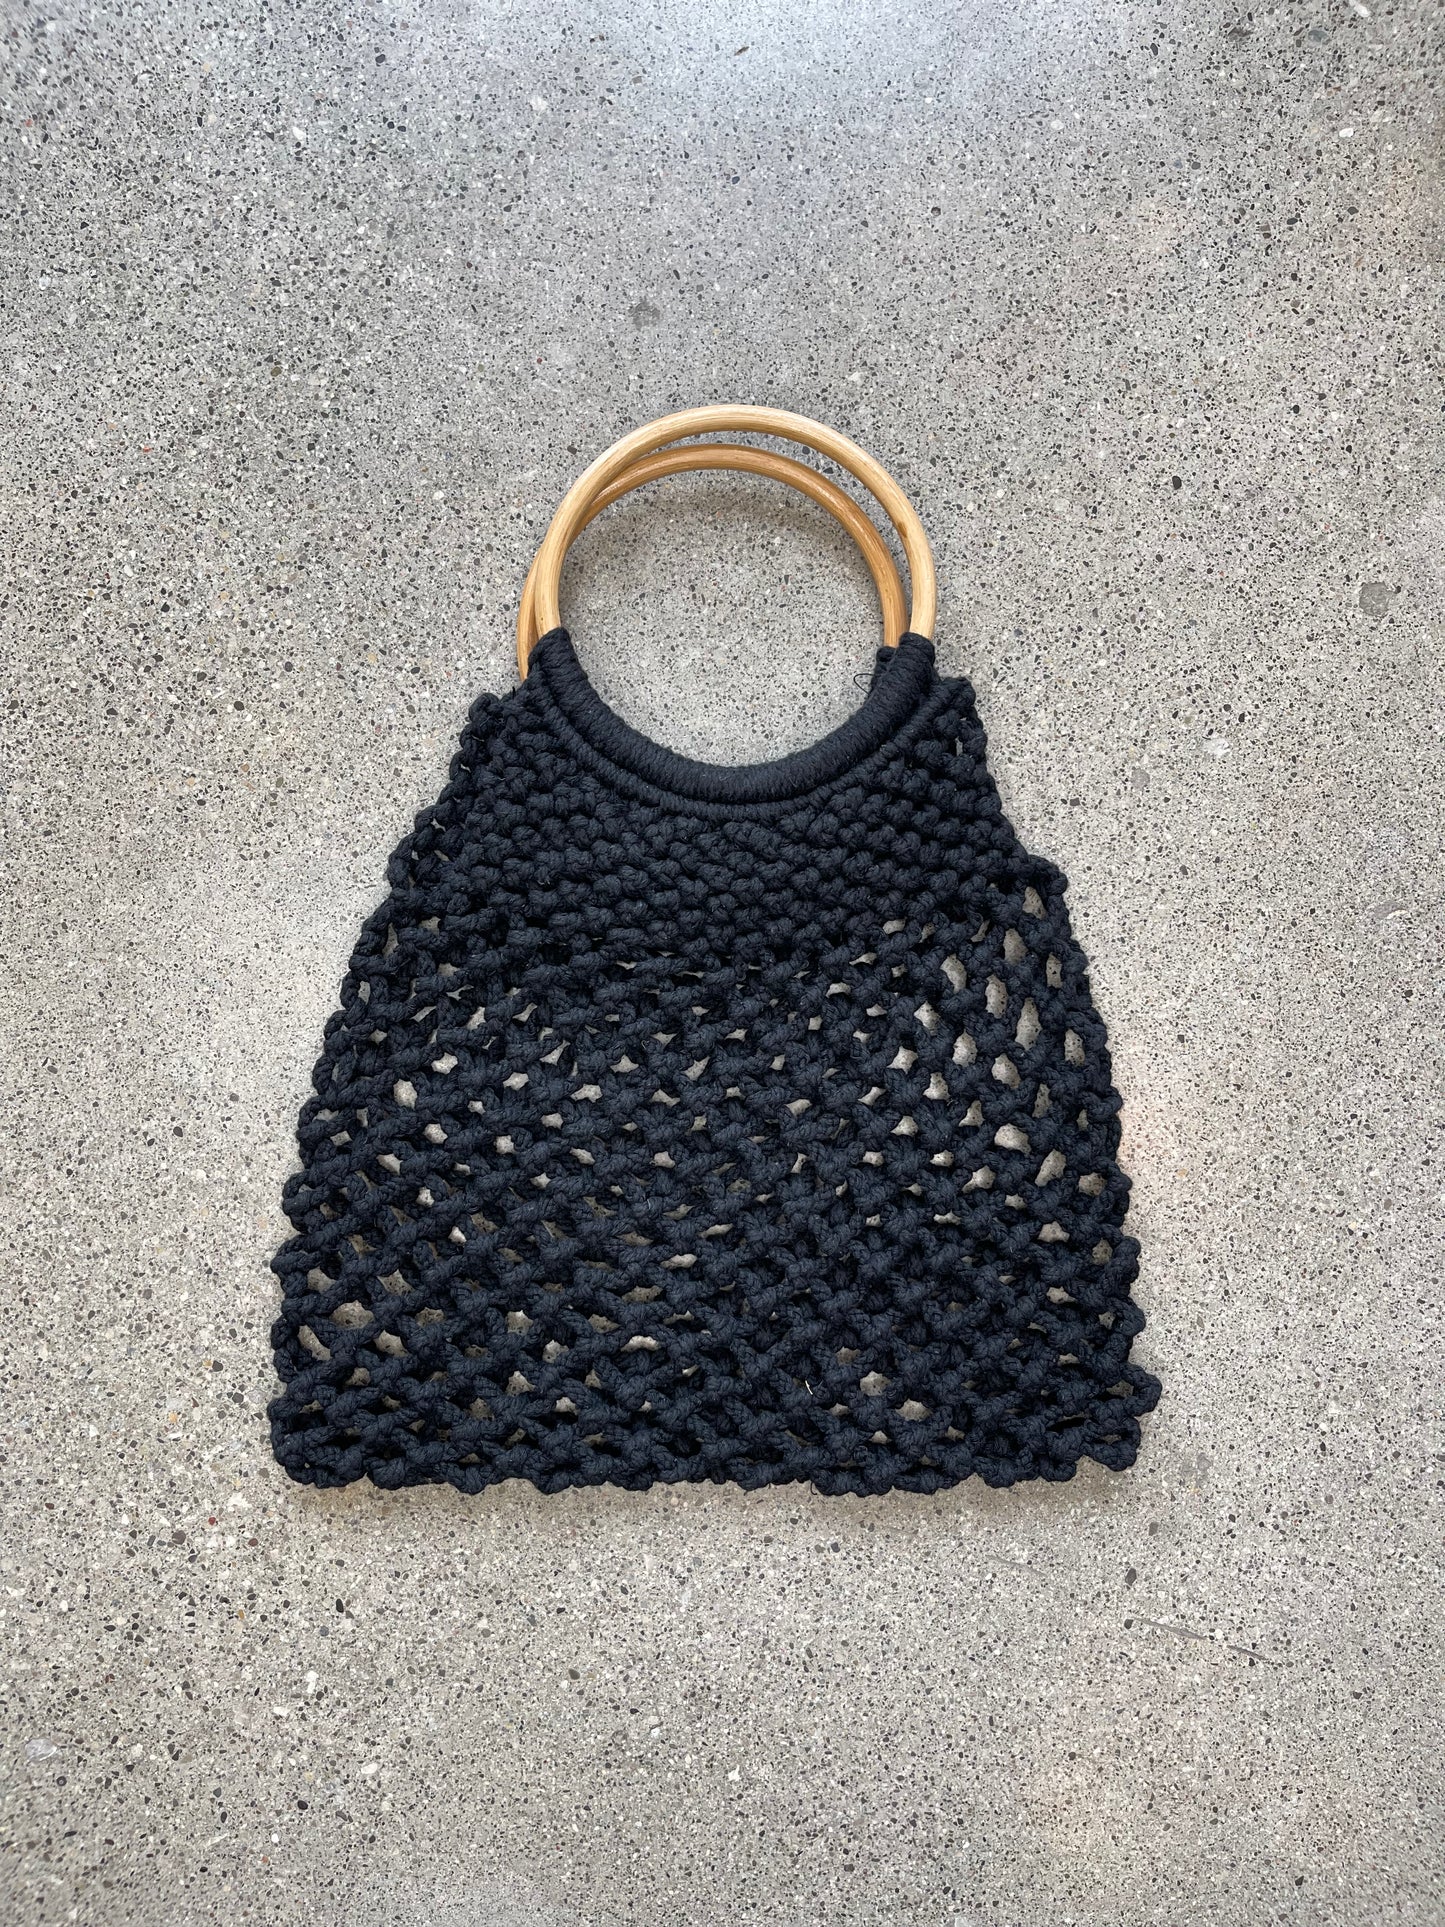 Black Handmade Macrame Tote Bag With Wooden Handle